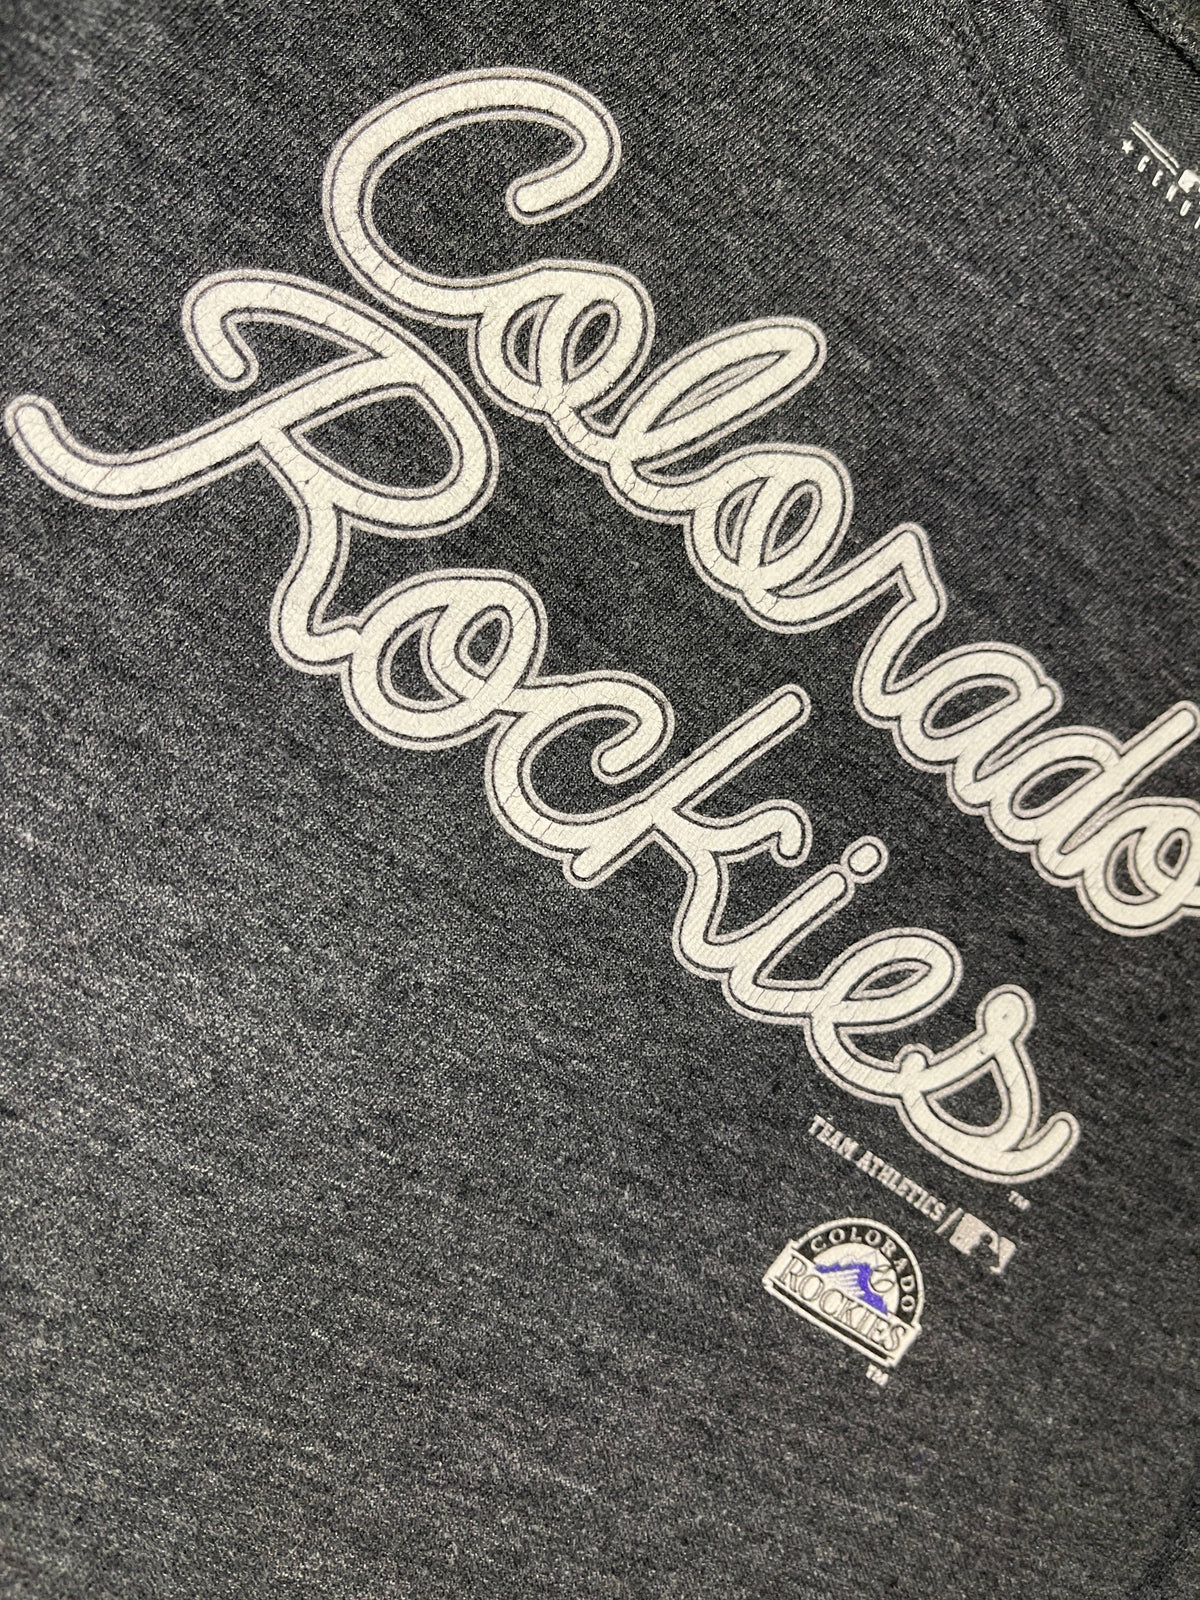 MLB Colorado Rockies Heathered Charcoal Grey T-Shirt Toddler 4T